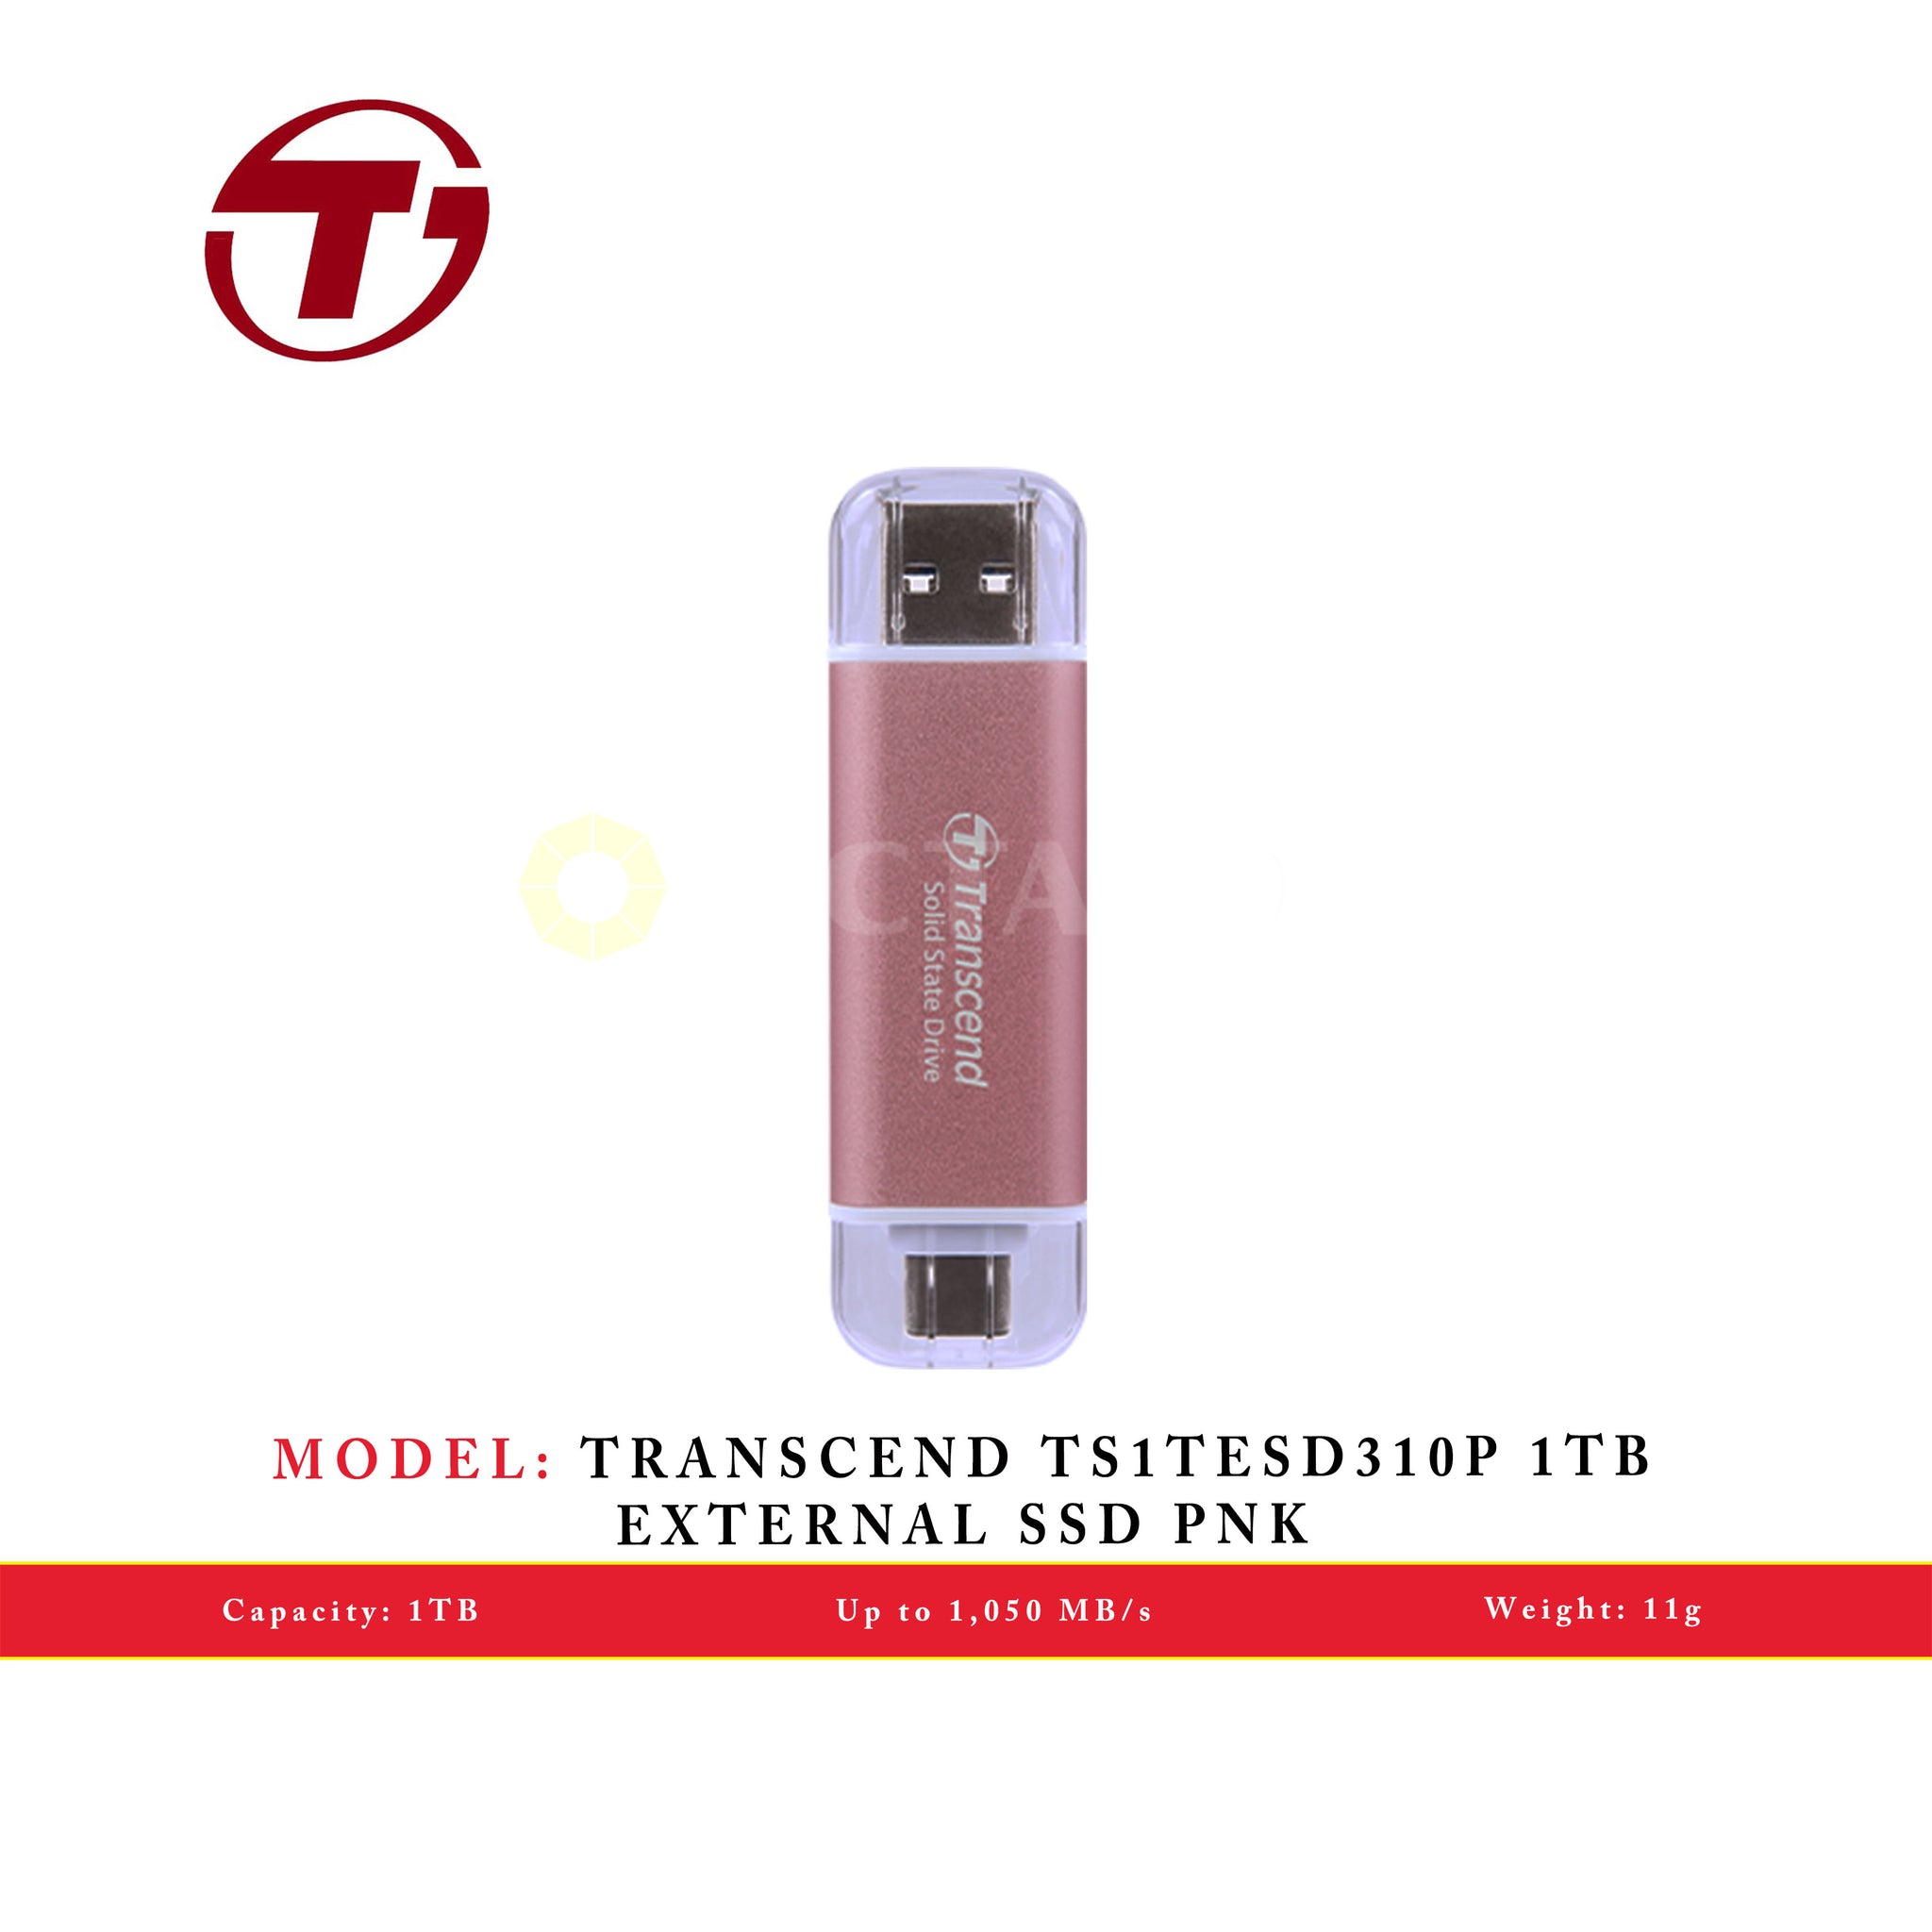 TRANSCEND TS1TESD310P 1TB EXTERNAL SSD PNK